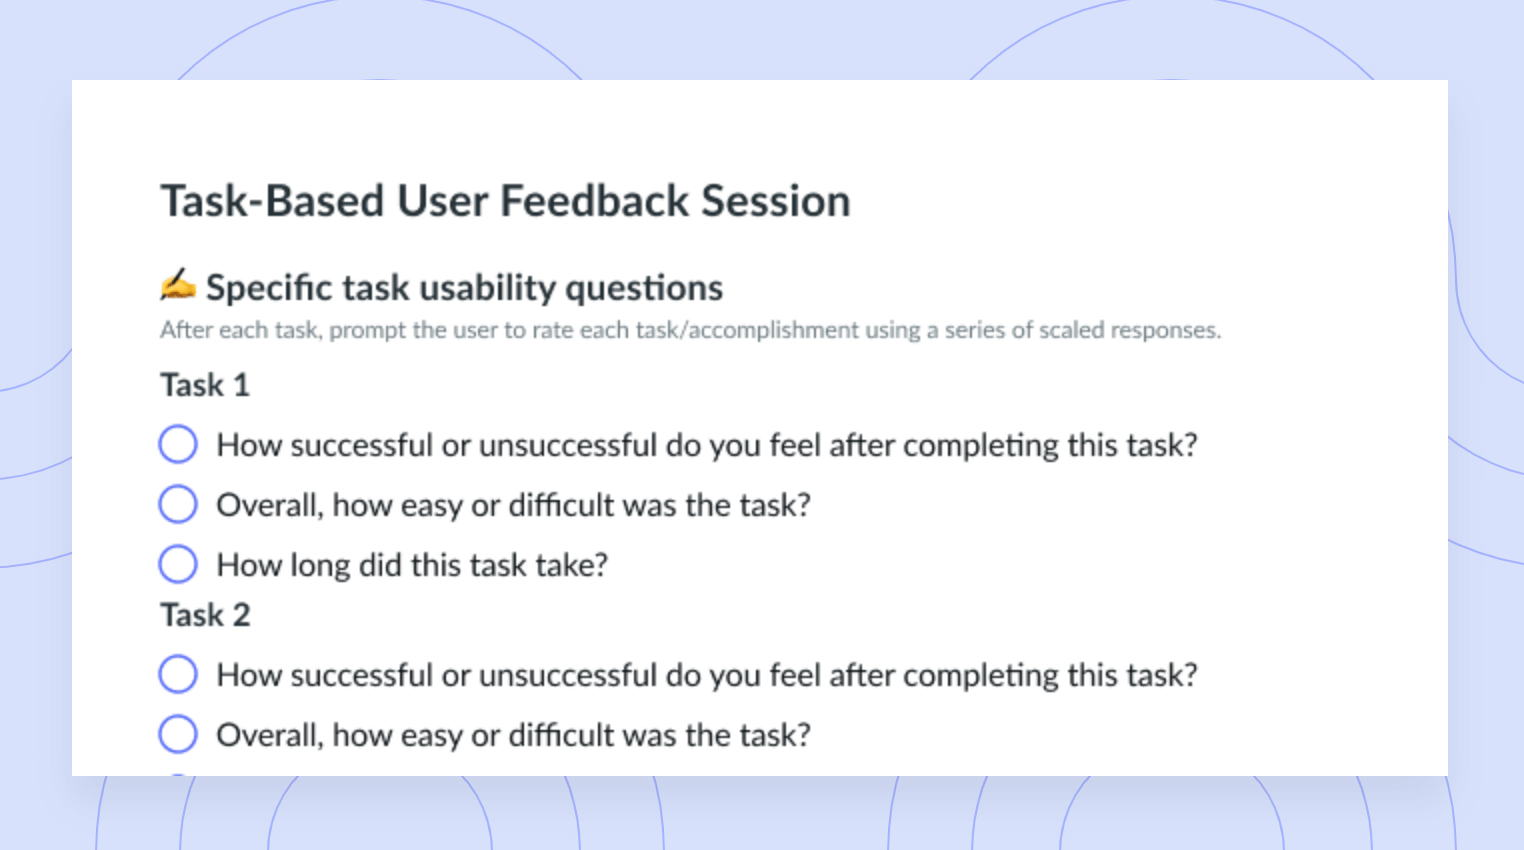 Task-Based User Feedback Session Template